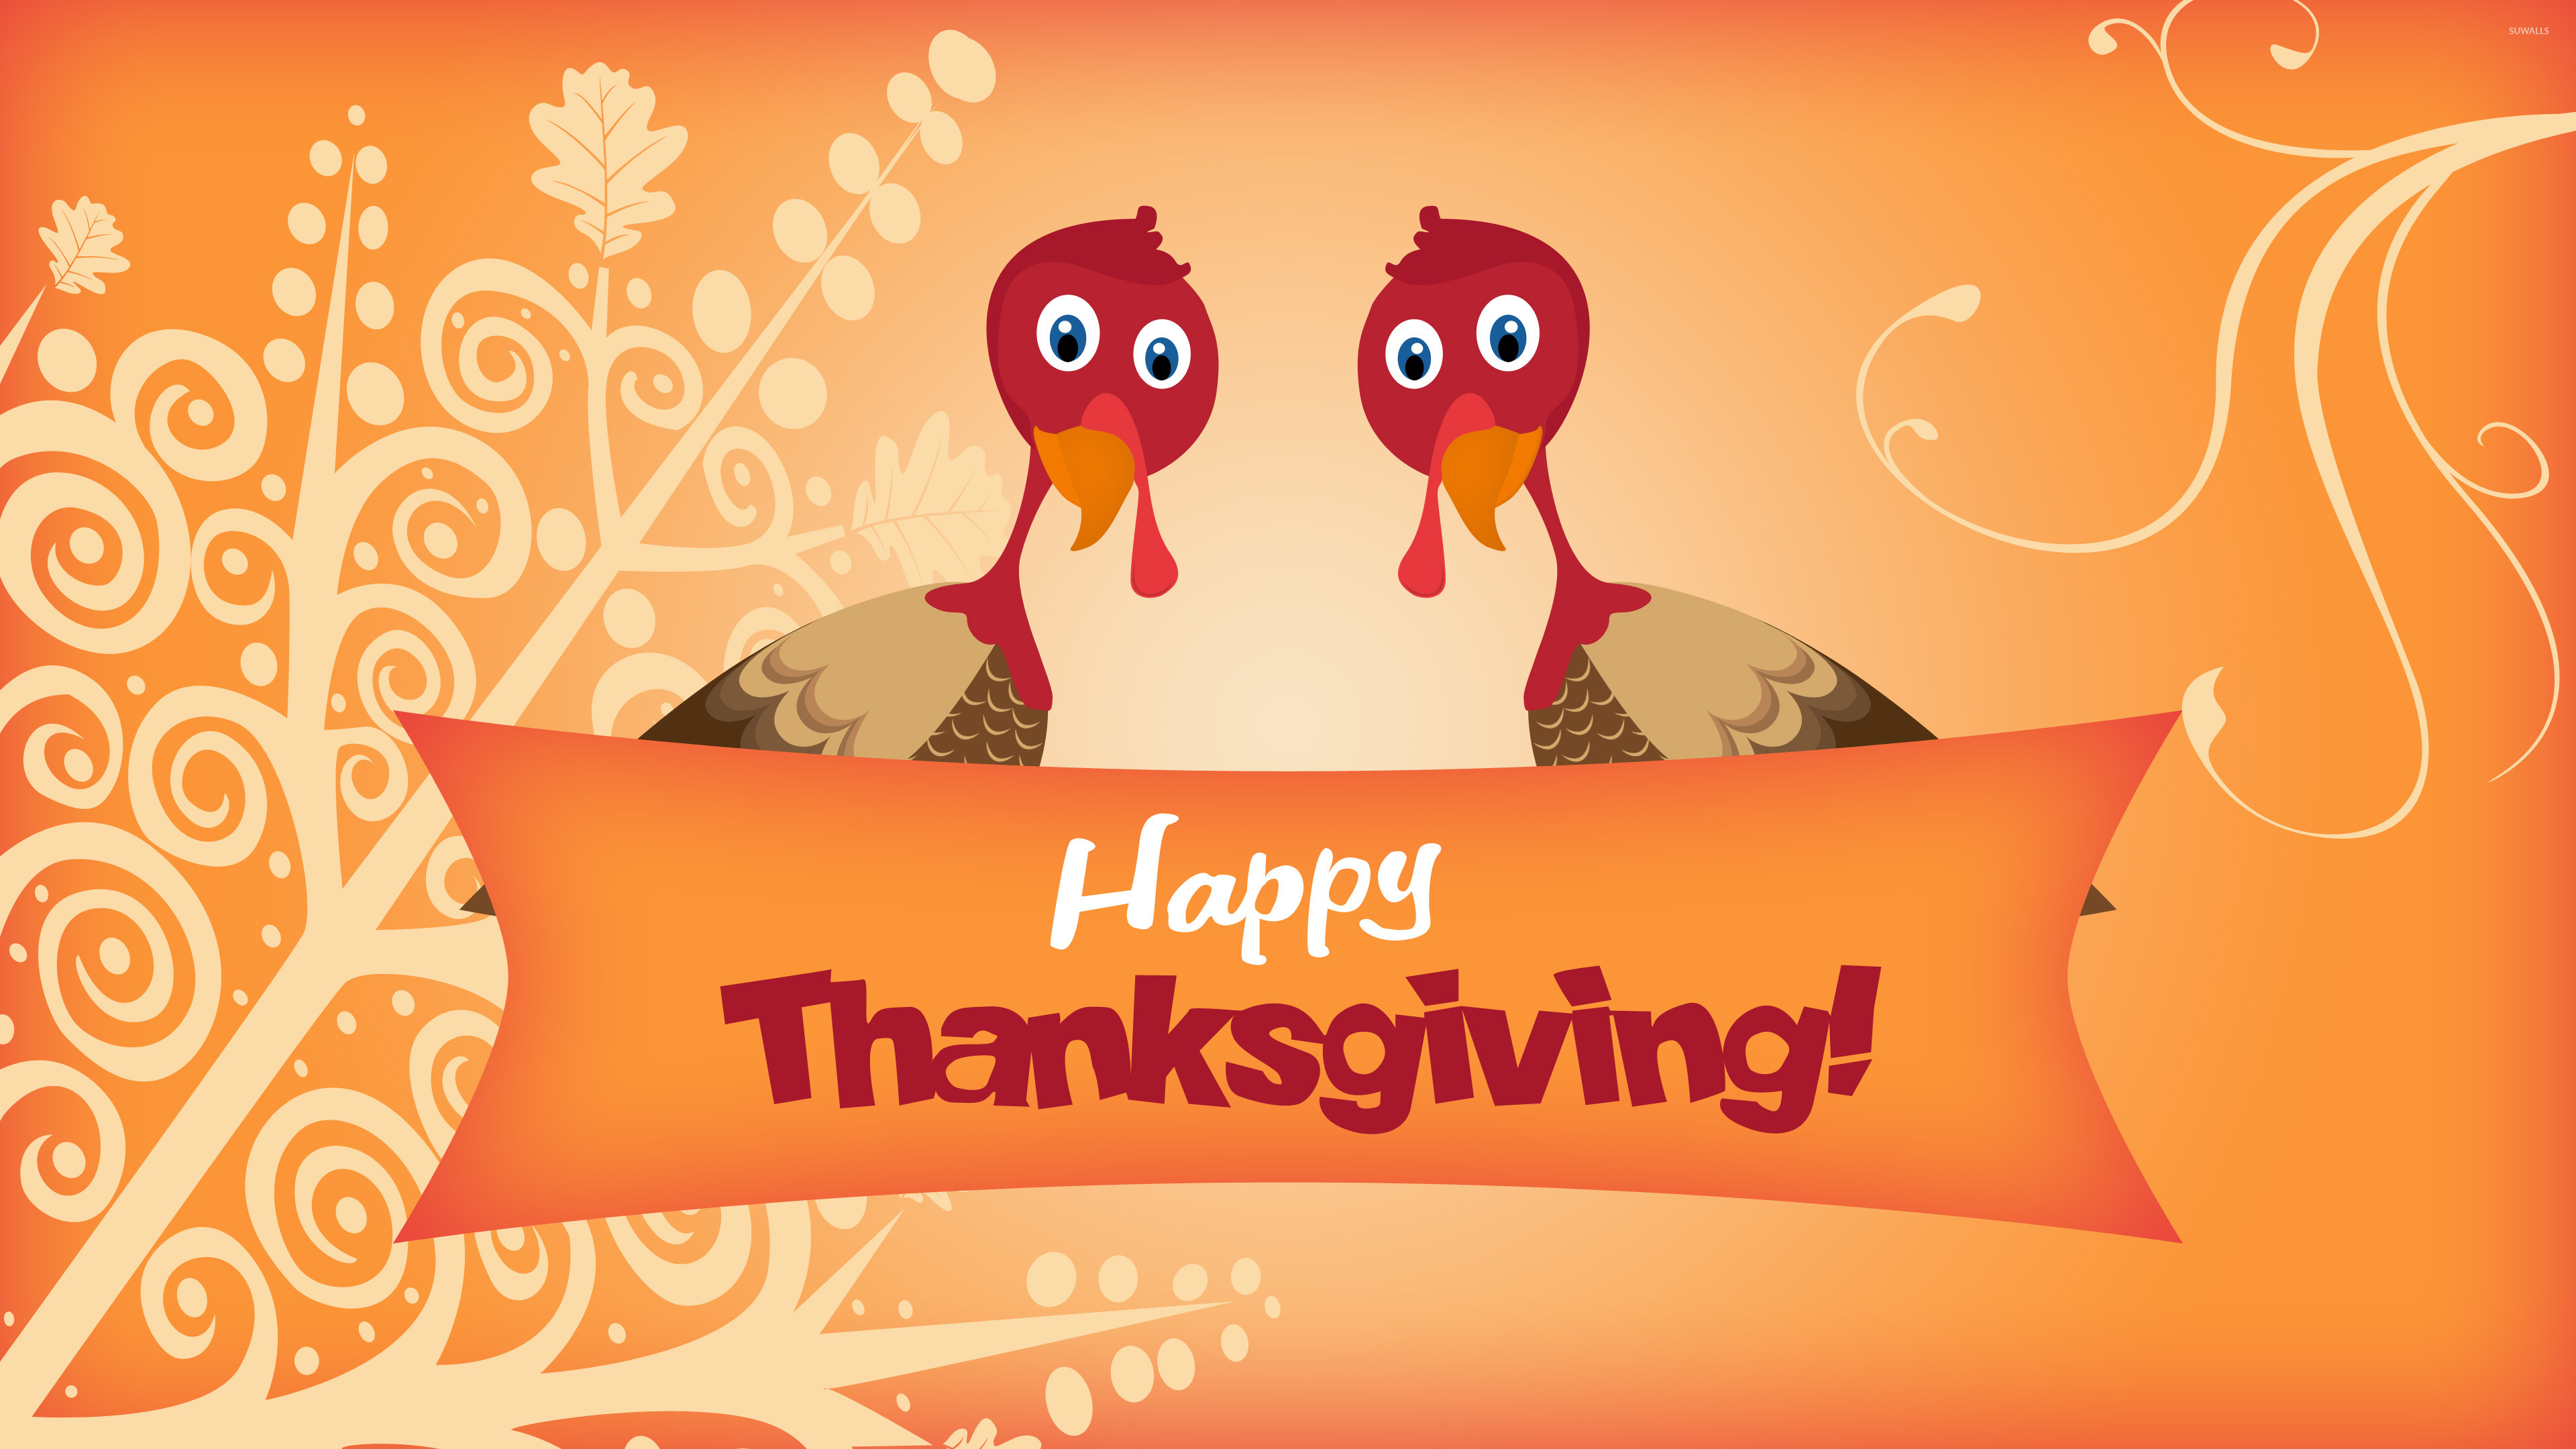 Two turkeys wishing you Happy Thanksgiving wallpaper jpg